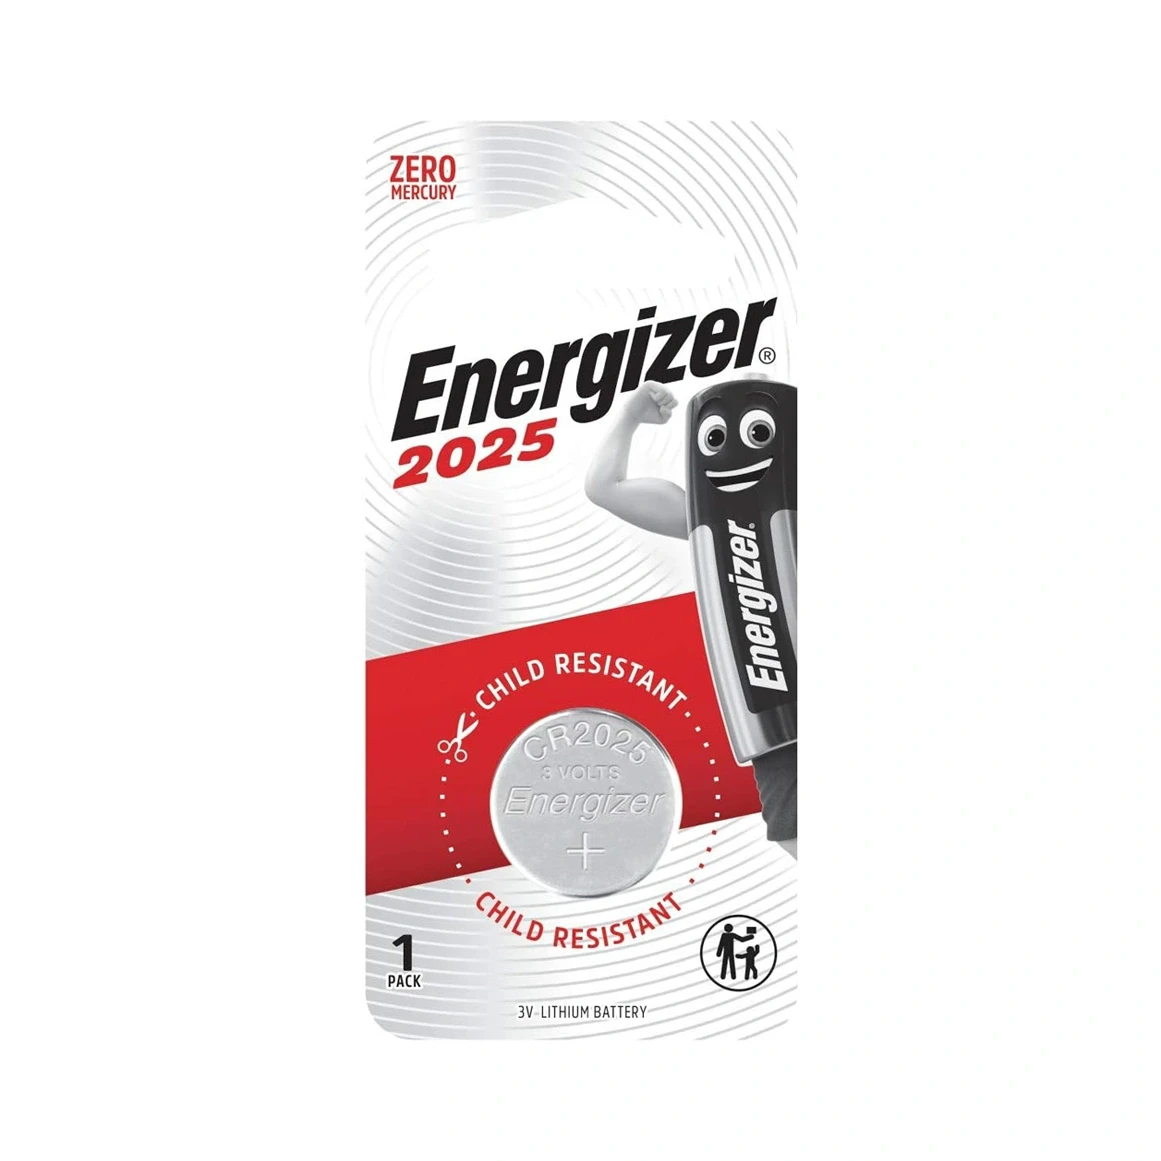 Energizer Coin Battery حجر قرش2025